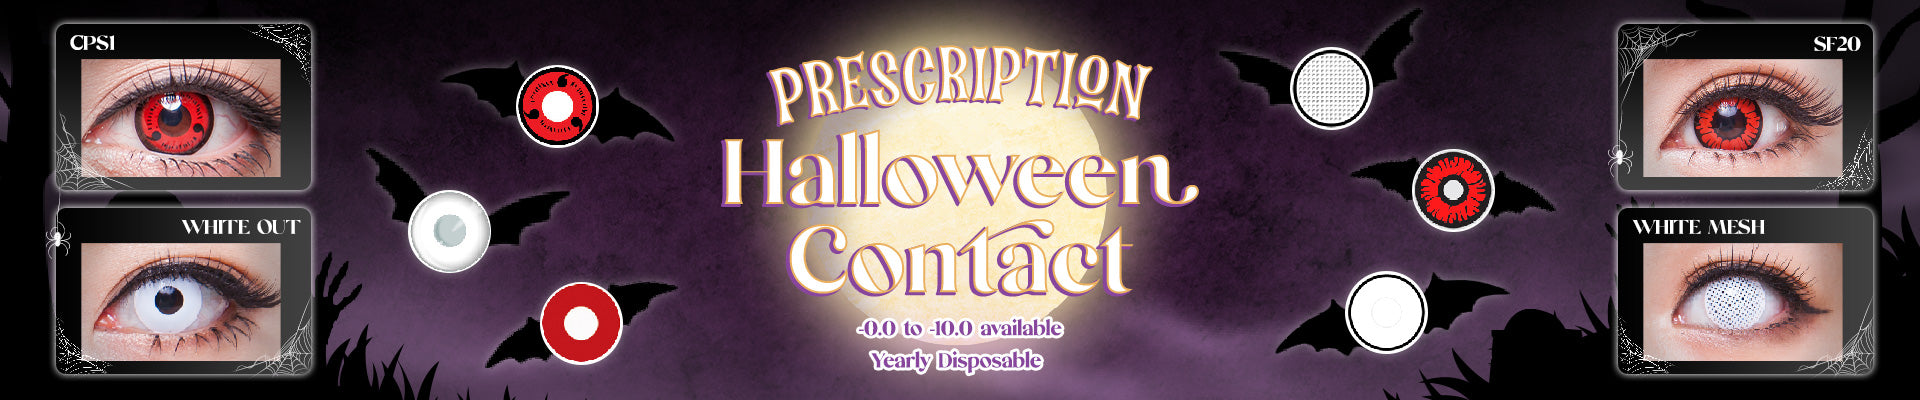 Prescription Halloween Contacts